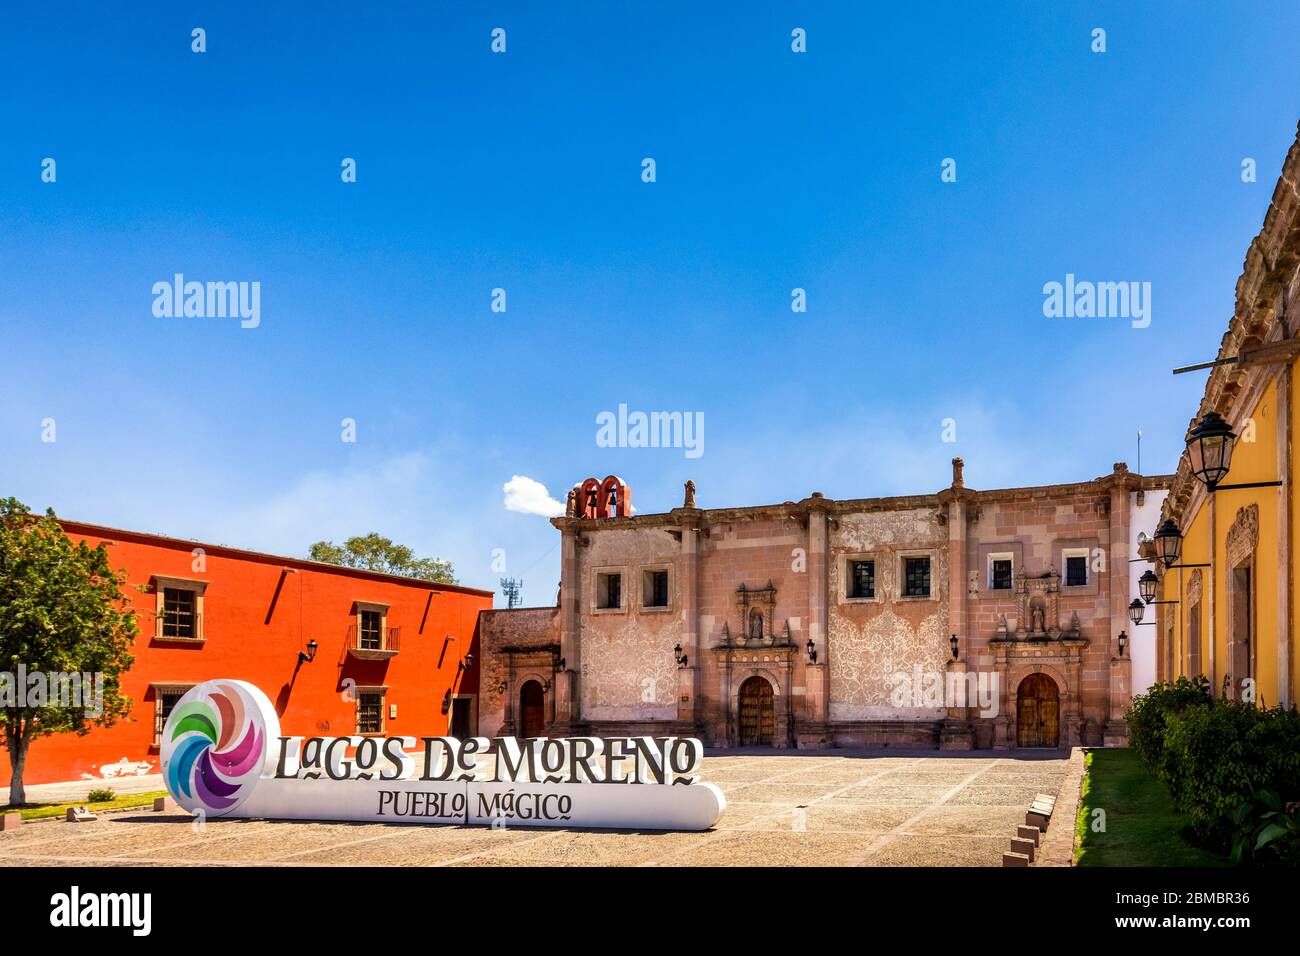 Rinconada Capuchinas with the city sign in the Pueblo Magico of Lagos de Moreno, Jalisco, Mexico. Stock Photo